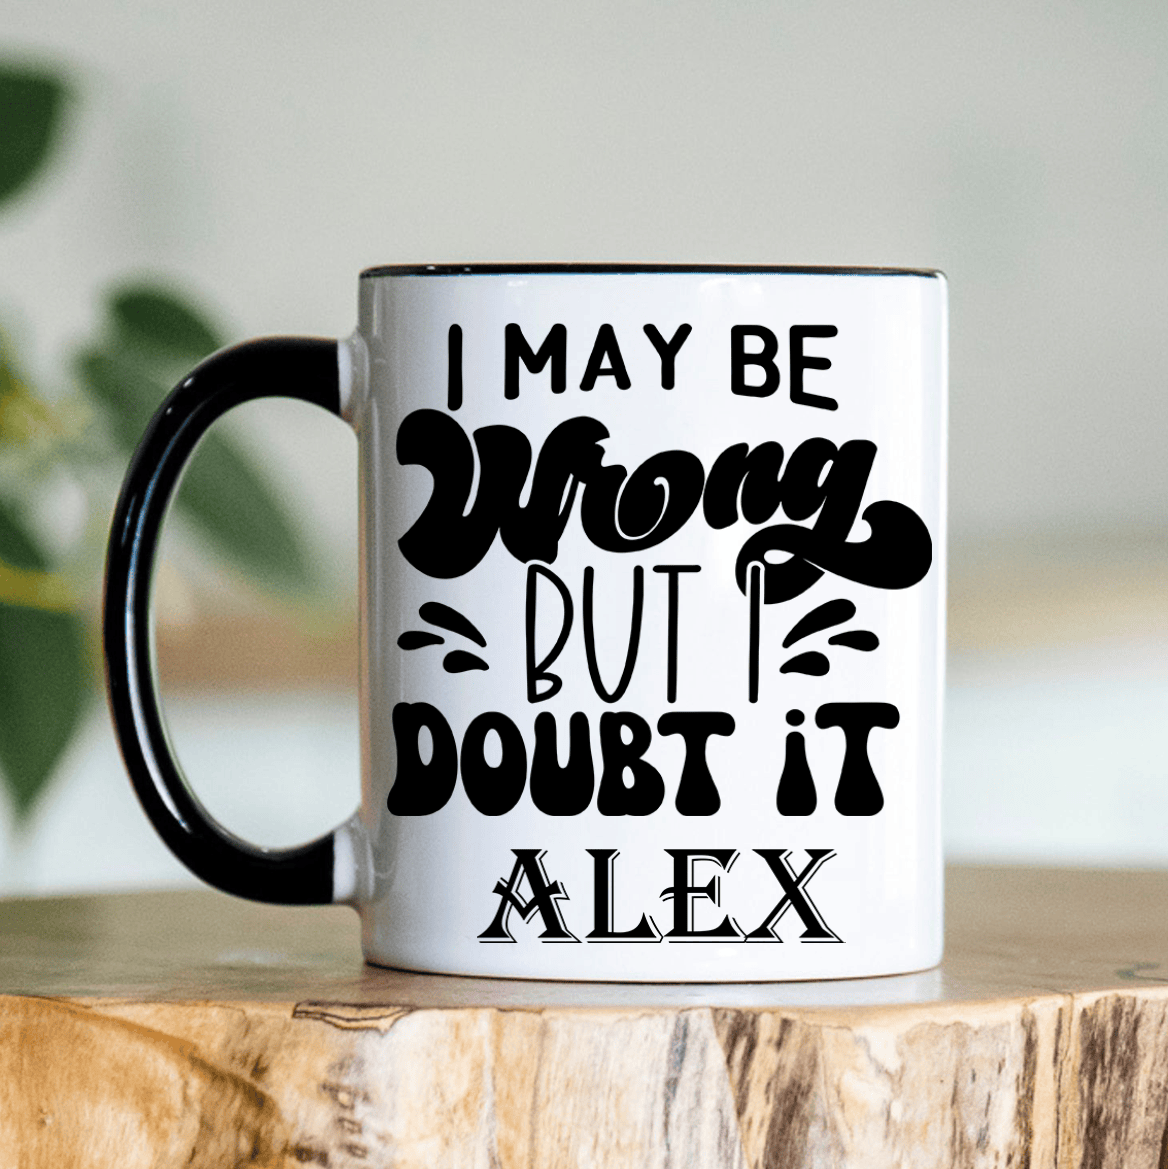 Black Funny Coffee Mug With Doubtful That Im Wrong Design